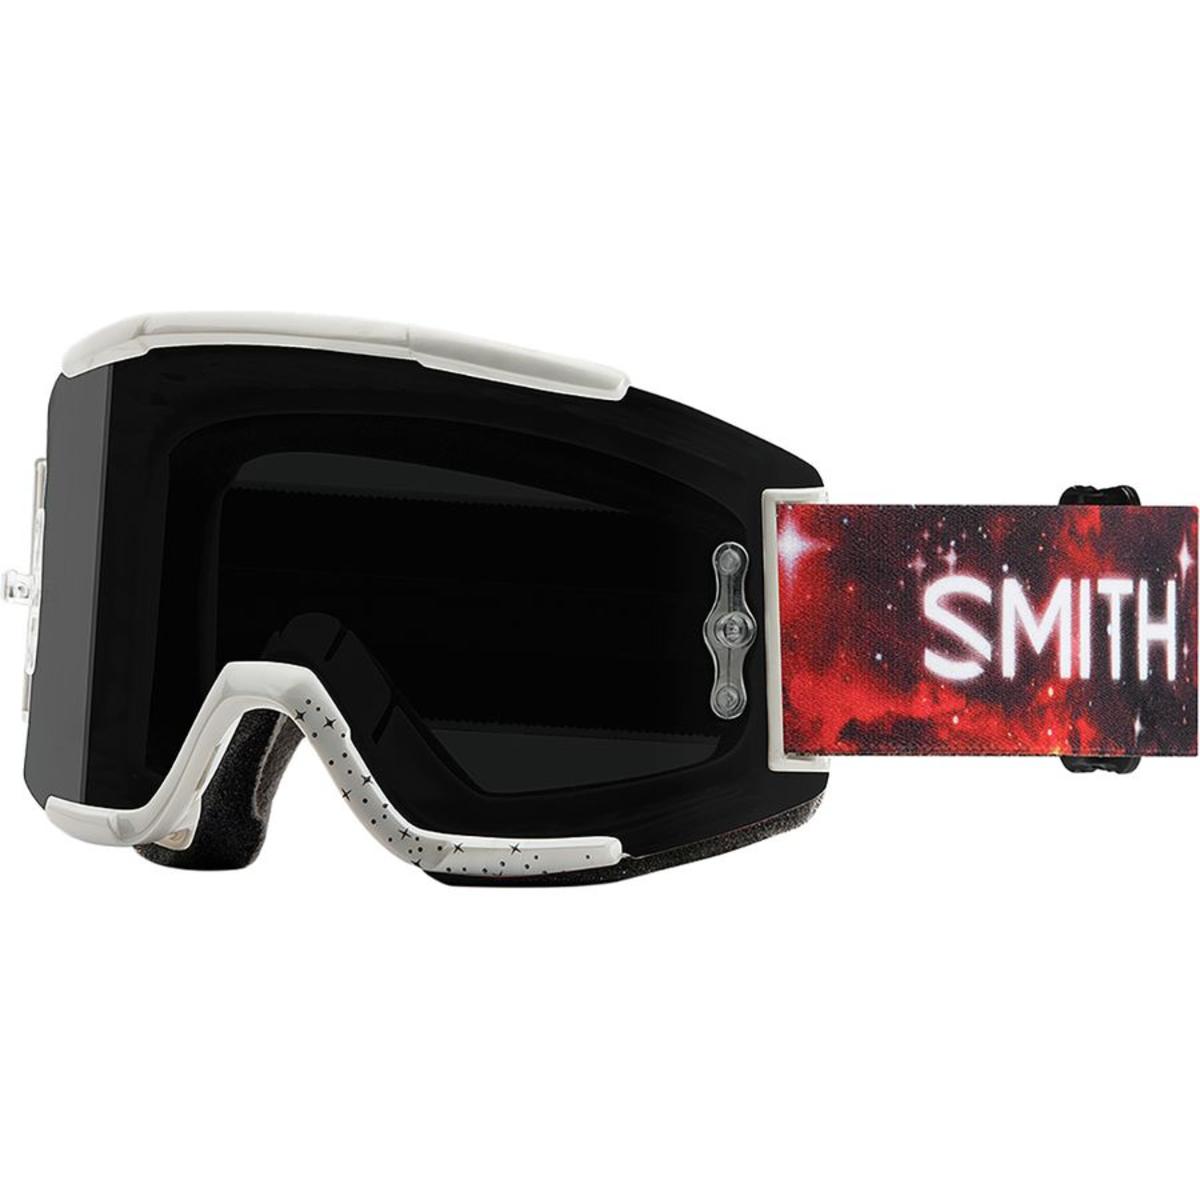 Smith Squad MTB Goggles